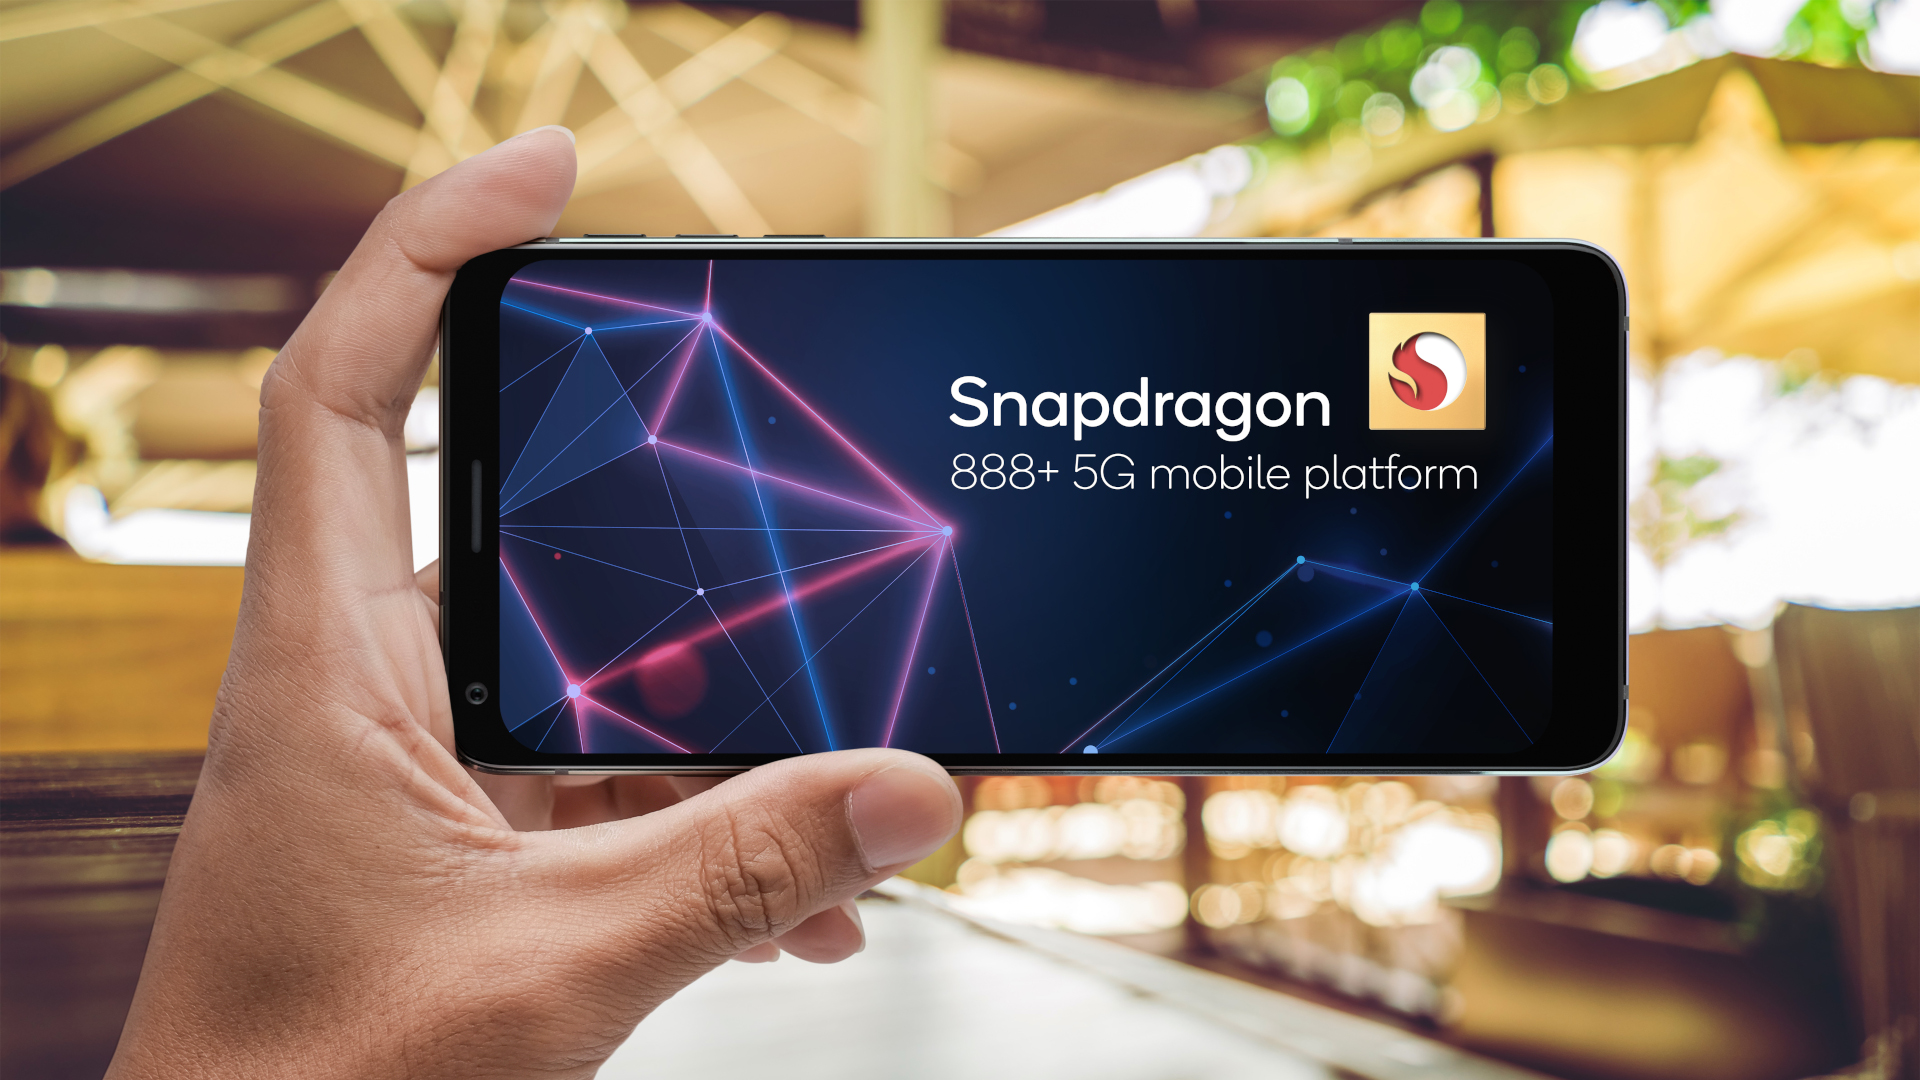 Snapdragon 888 Plus phone